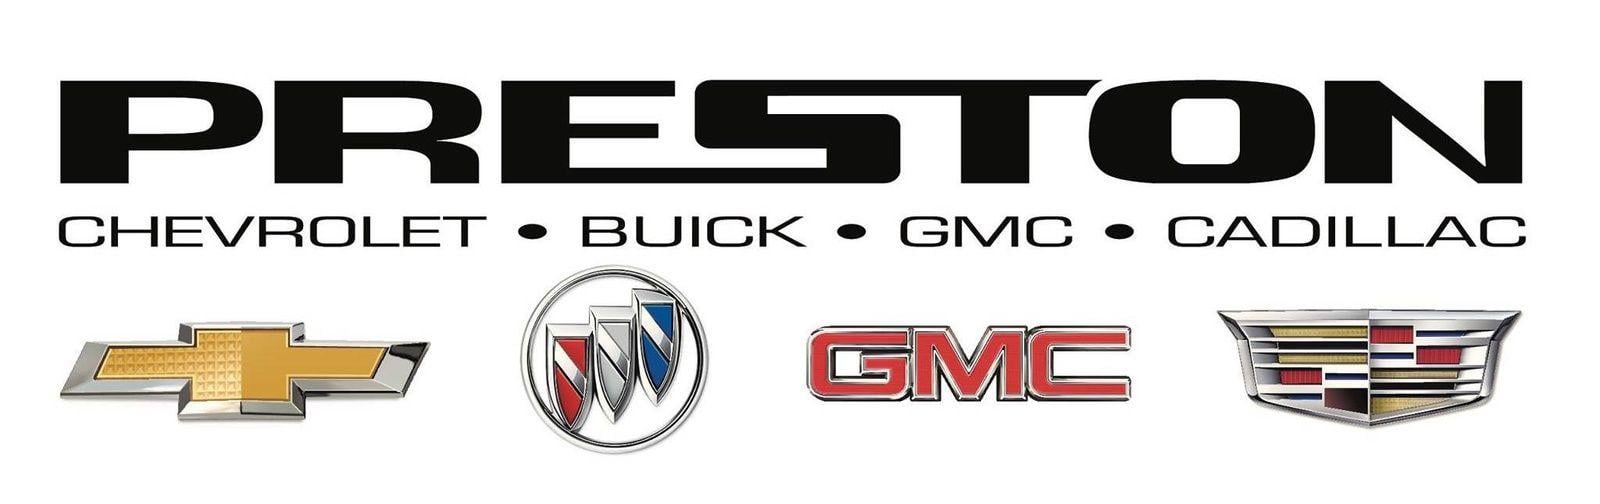 Chevy Buick Logo - Preston Chevrolet Buick GMC Cadillac Ltd. - Langley, BC: Read ...